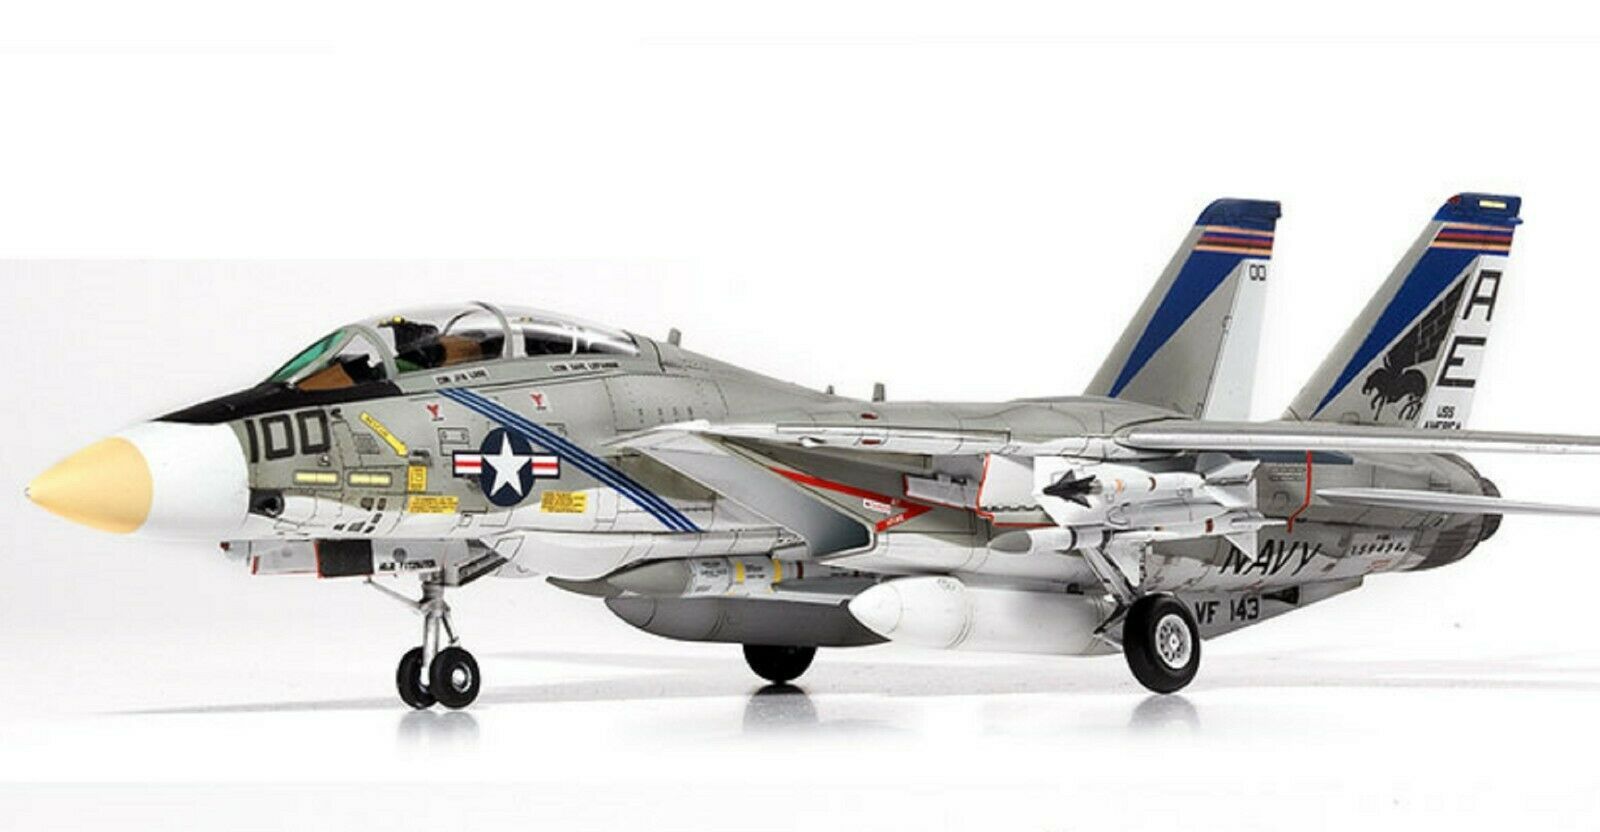 Academy 12563 USN F-14A VF-143 Pukin Dogs Plamodel Plastic Hobby Model Airplane - $62.92